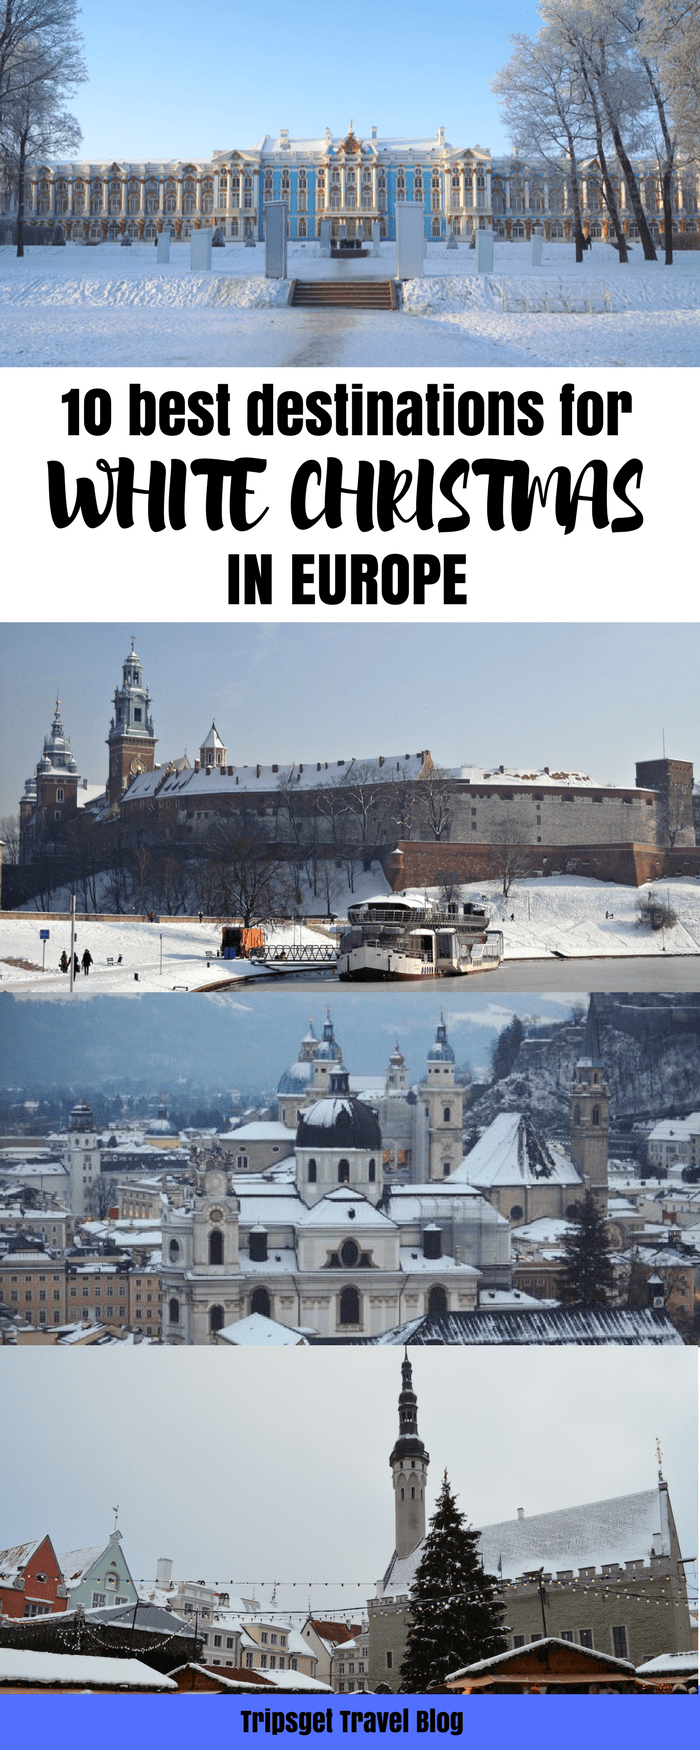 10 destinations in Europe for white Christmas. Where to go for Christmas in Europe. Moscow, Tallinn, St. Petersburg, Lapland, Stockholm, Riga